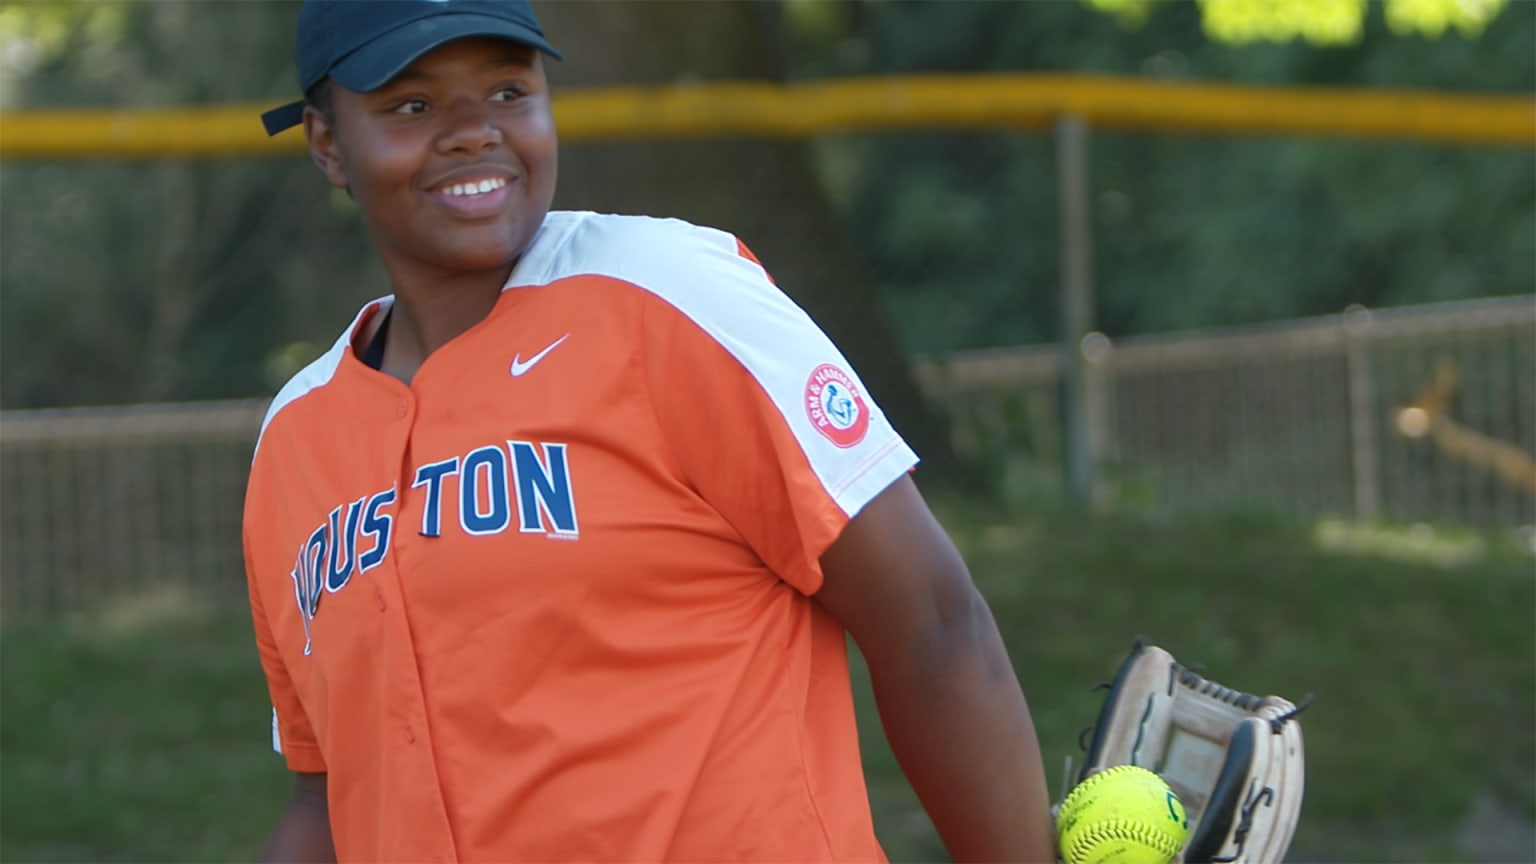 Houston area softball player Jada Cooper is pictured